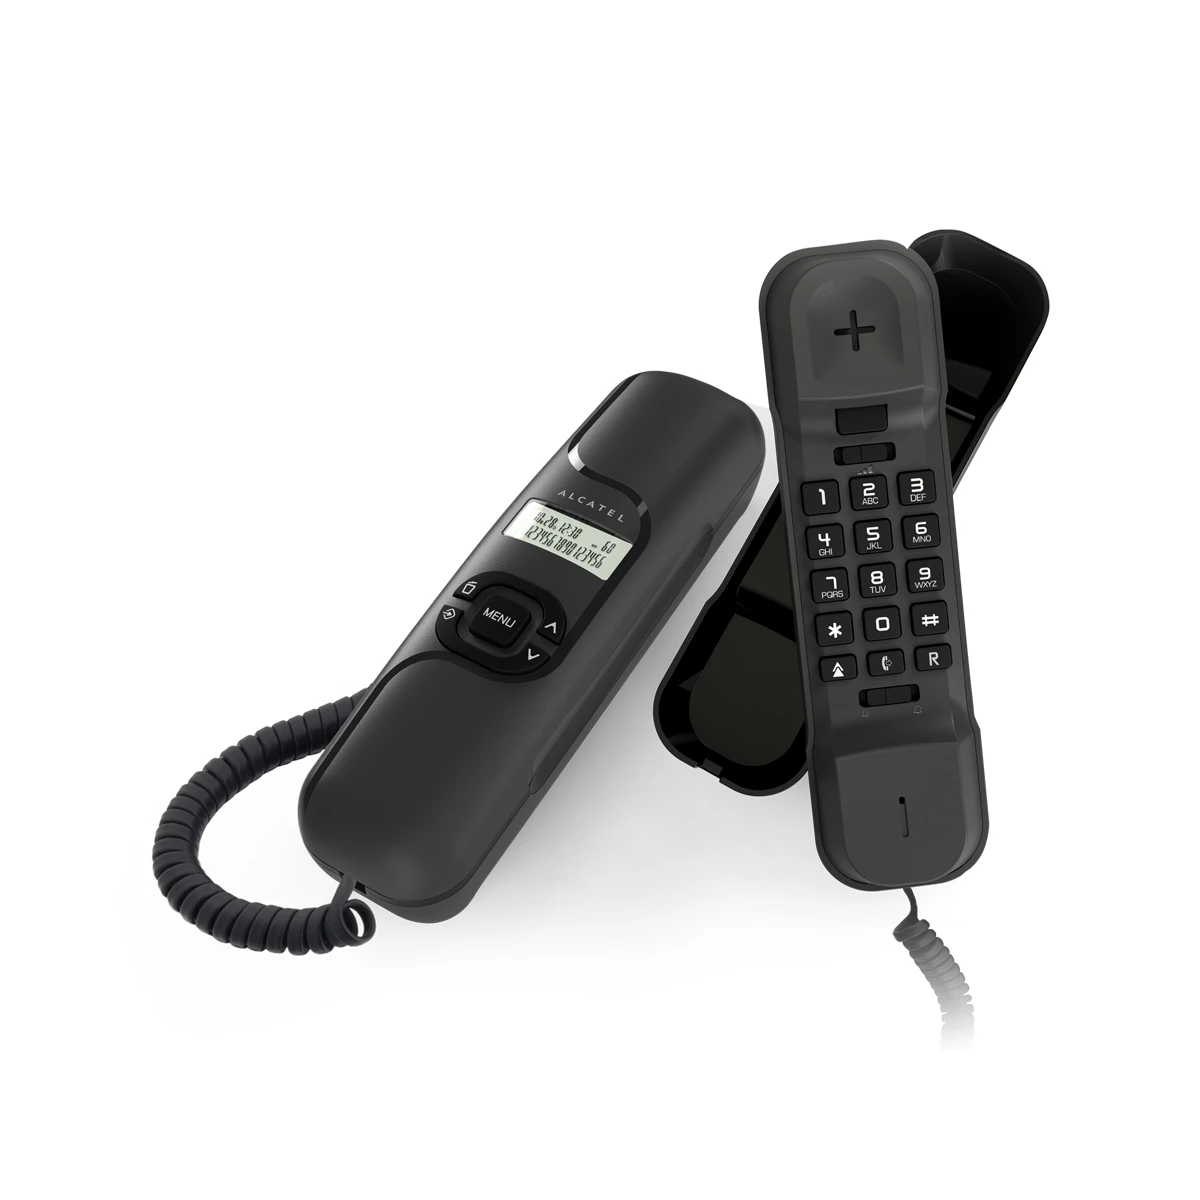 Swissvoice Xtra 1110 landline phone - Swissvoice - Phones